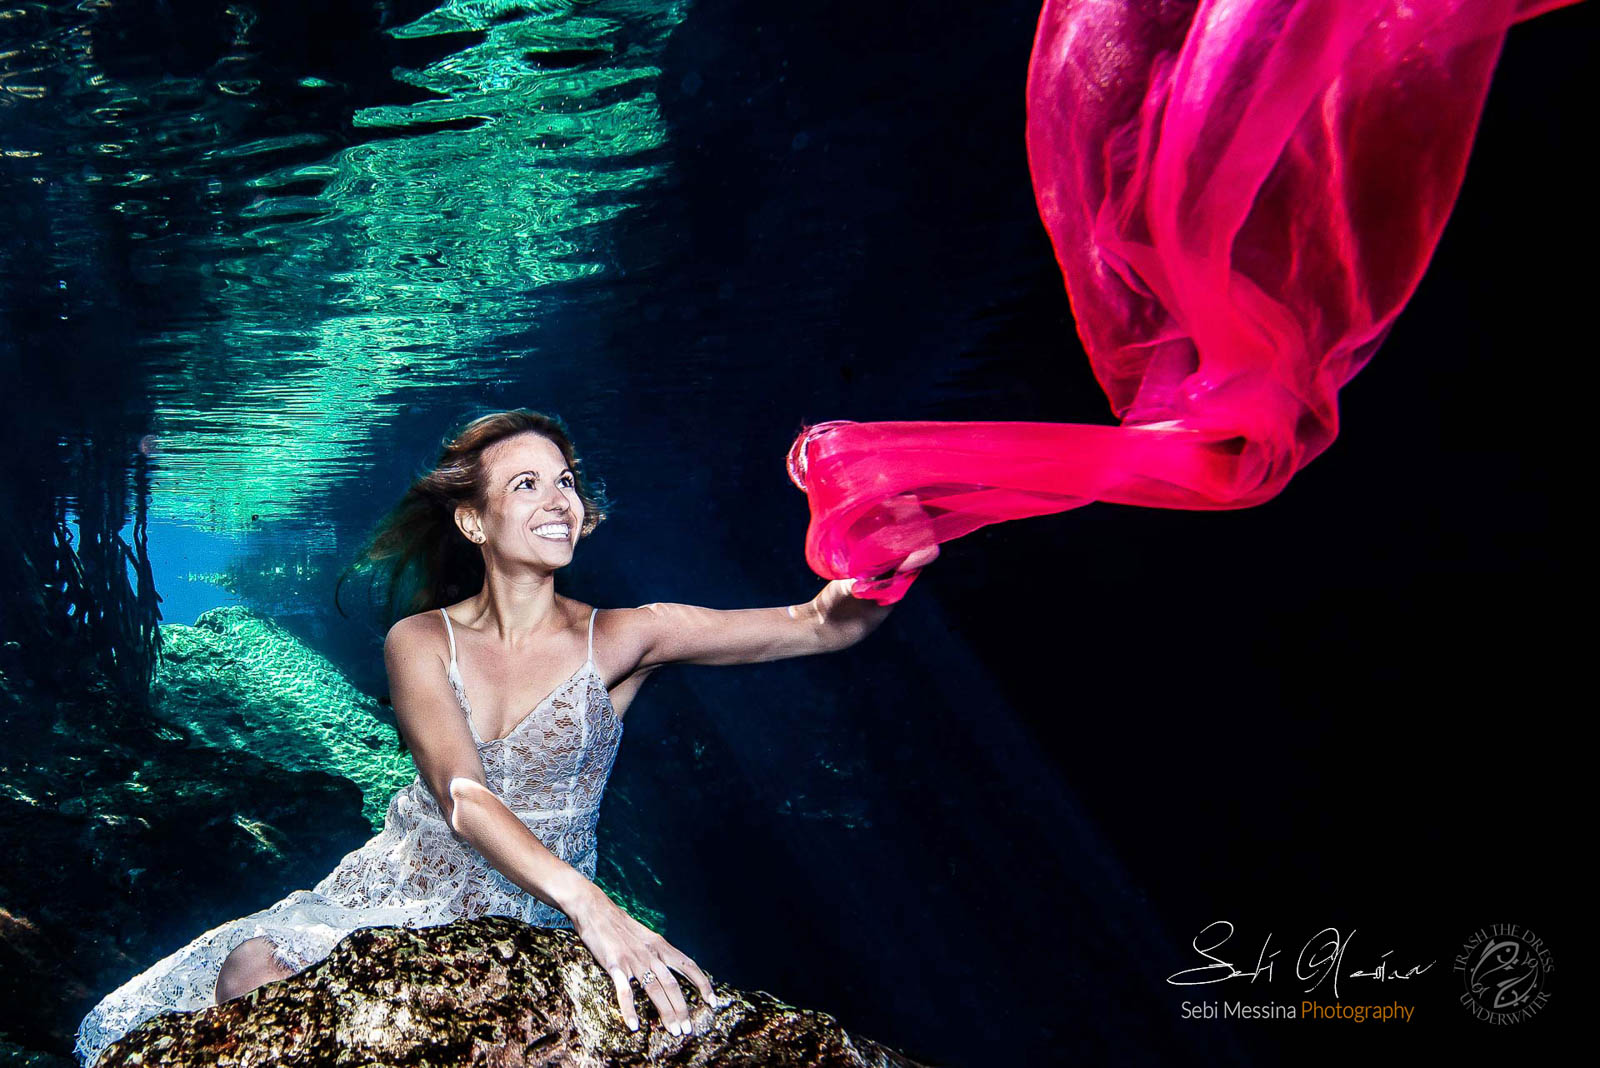 Underwater Photos in a cenote (Mexico) - Sebi Messina Photography